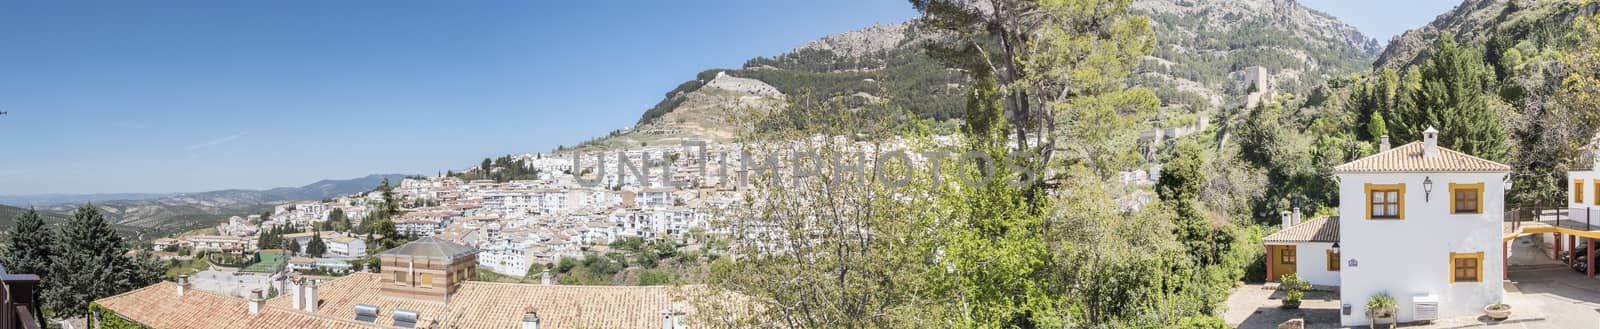 Panoramic view of Cazorla village, in the Sierra de Cazorla, Jae by max8xam